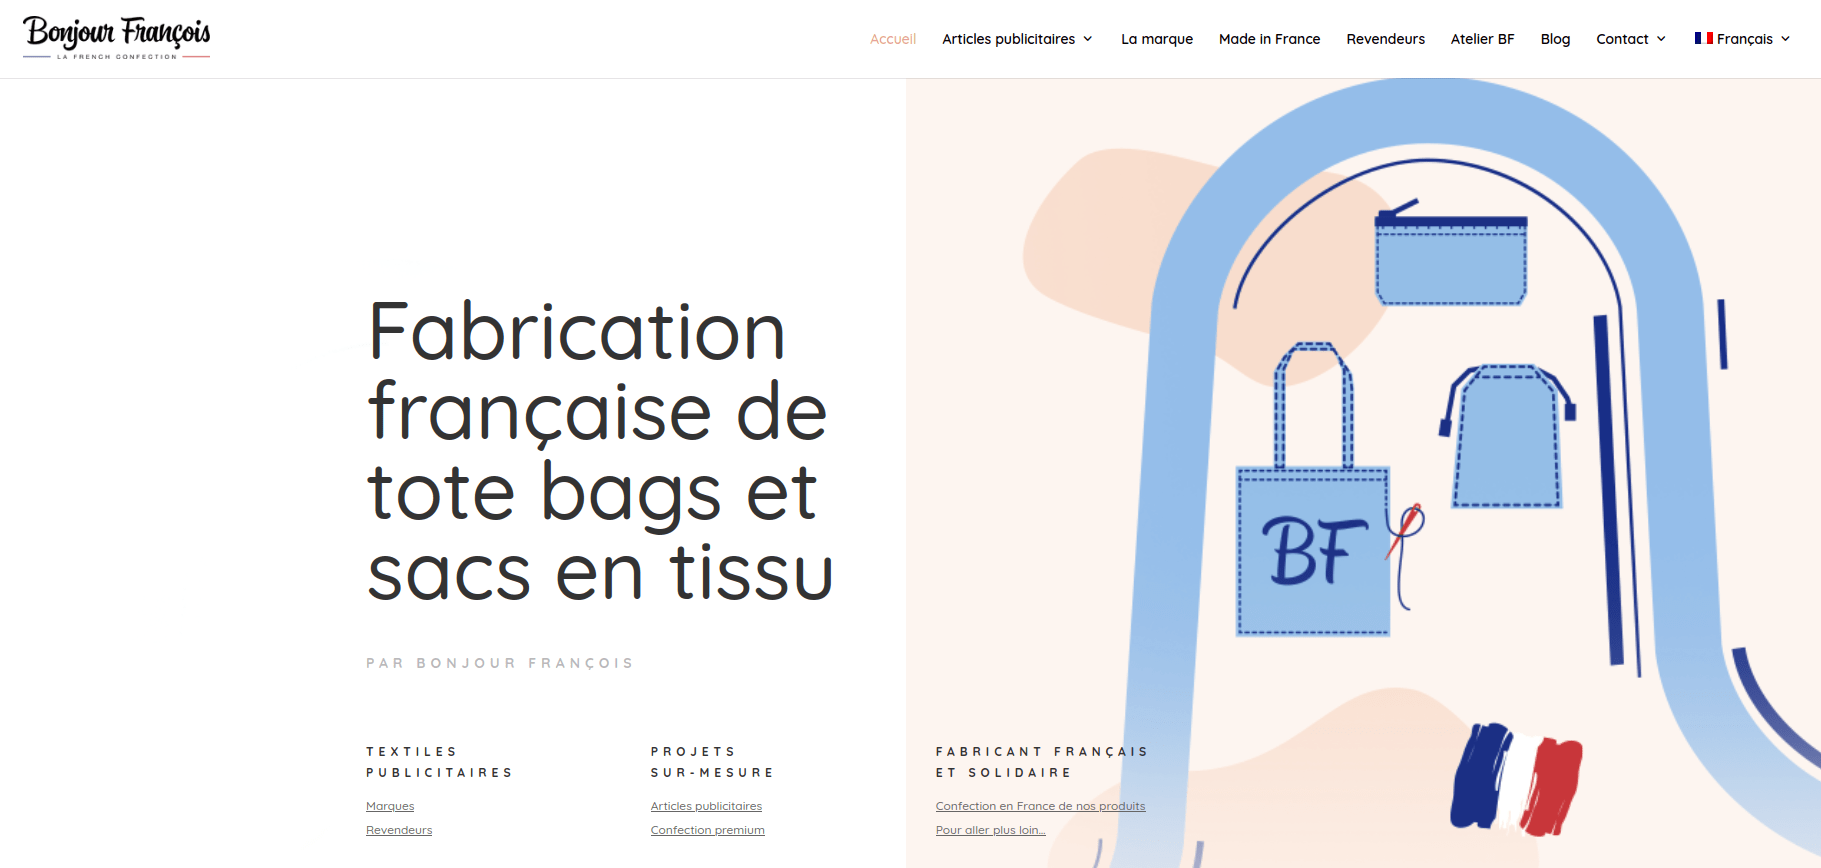 Site internet Bonjour François